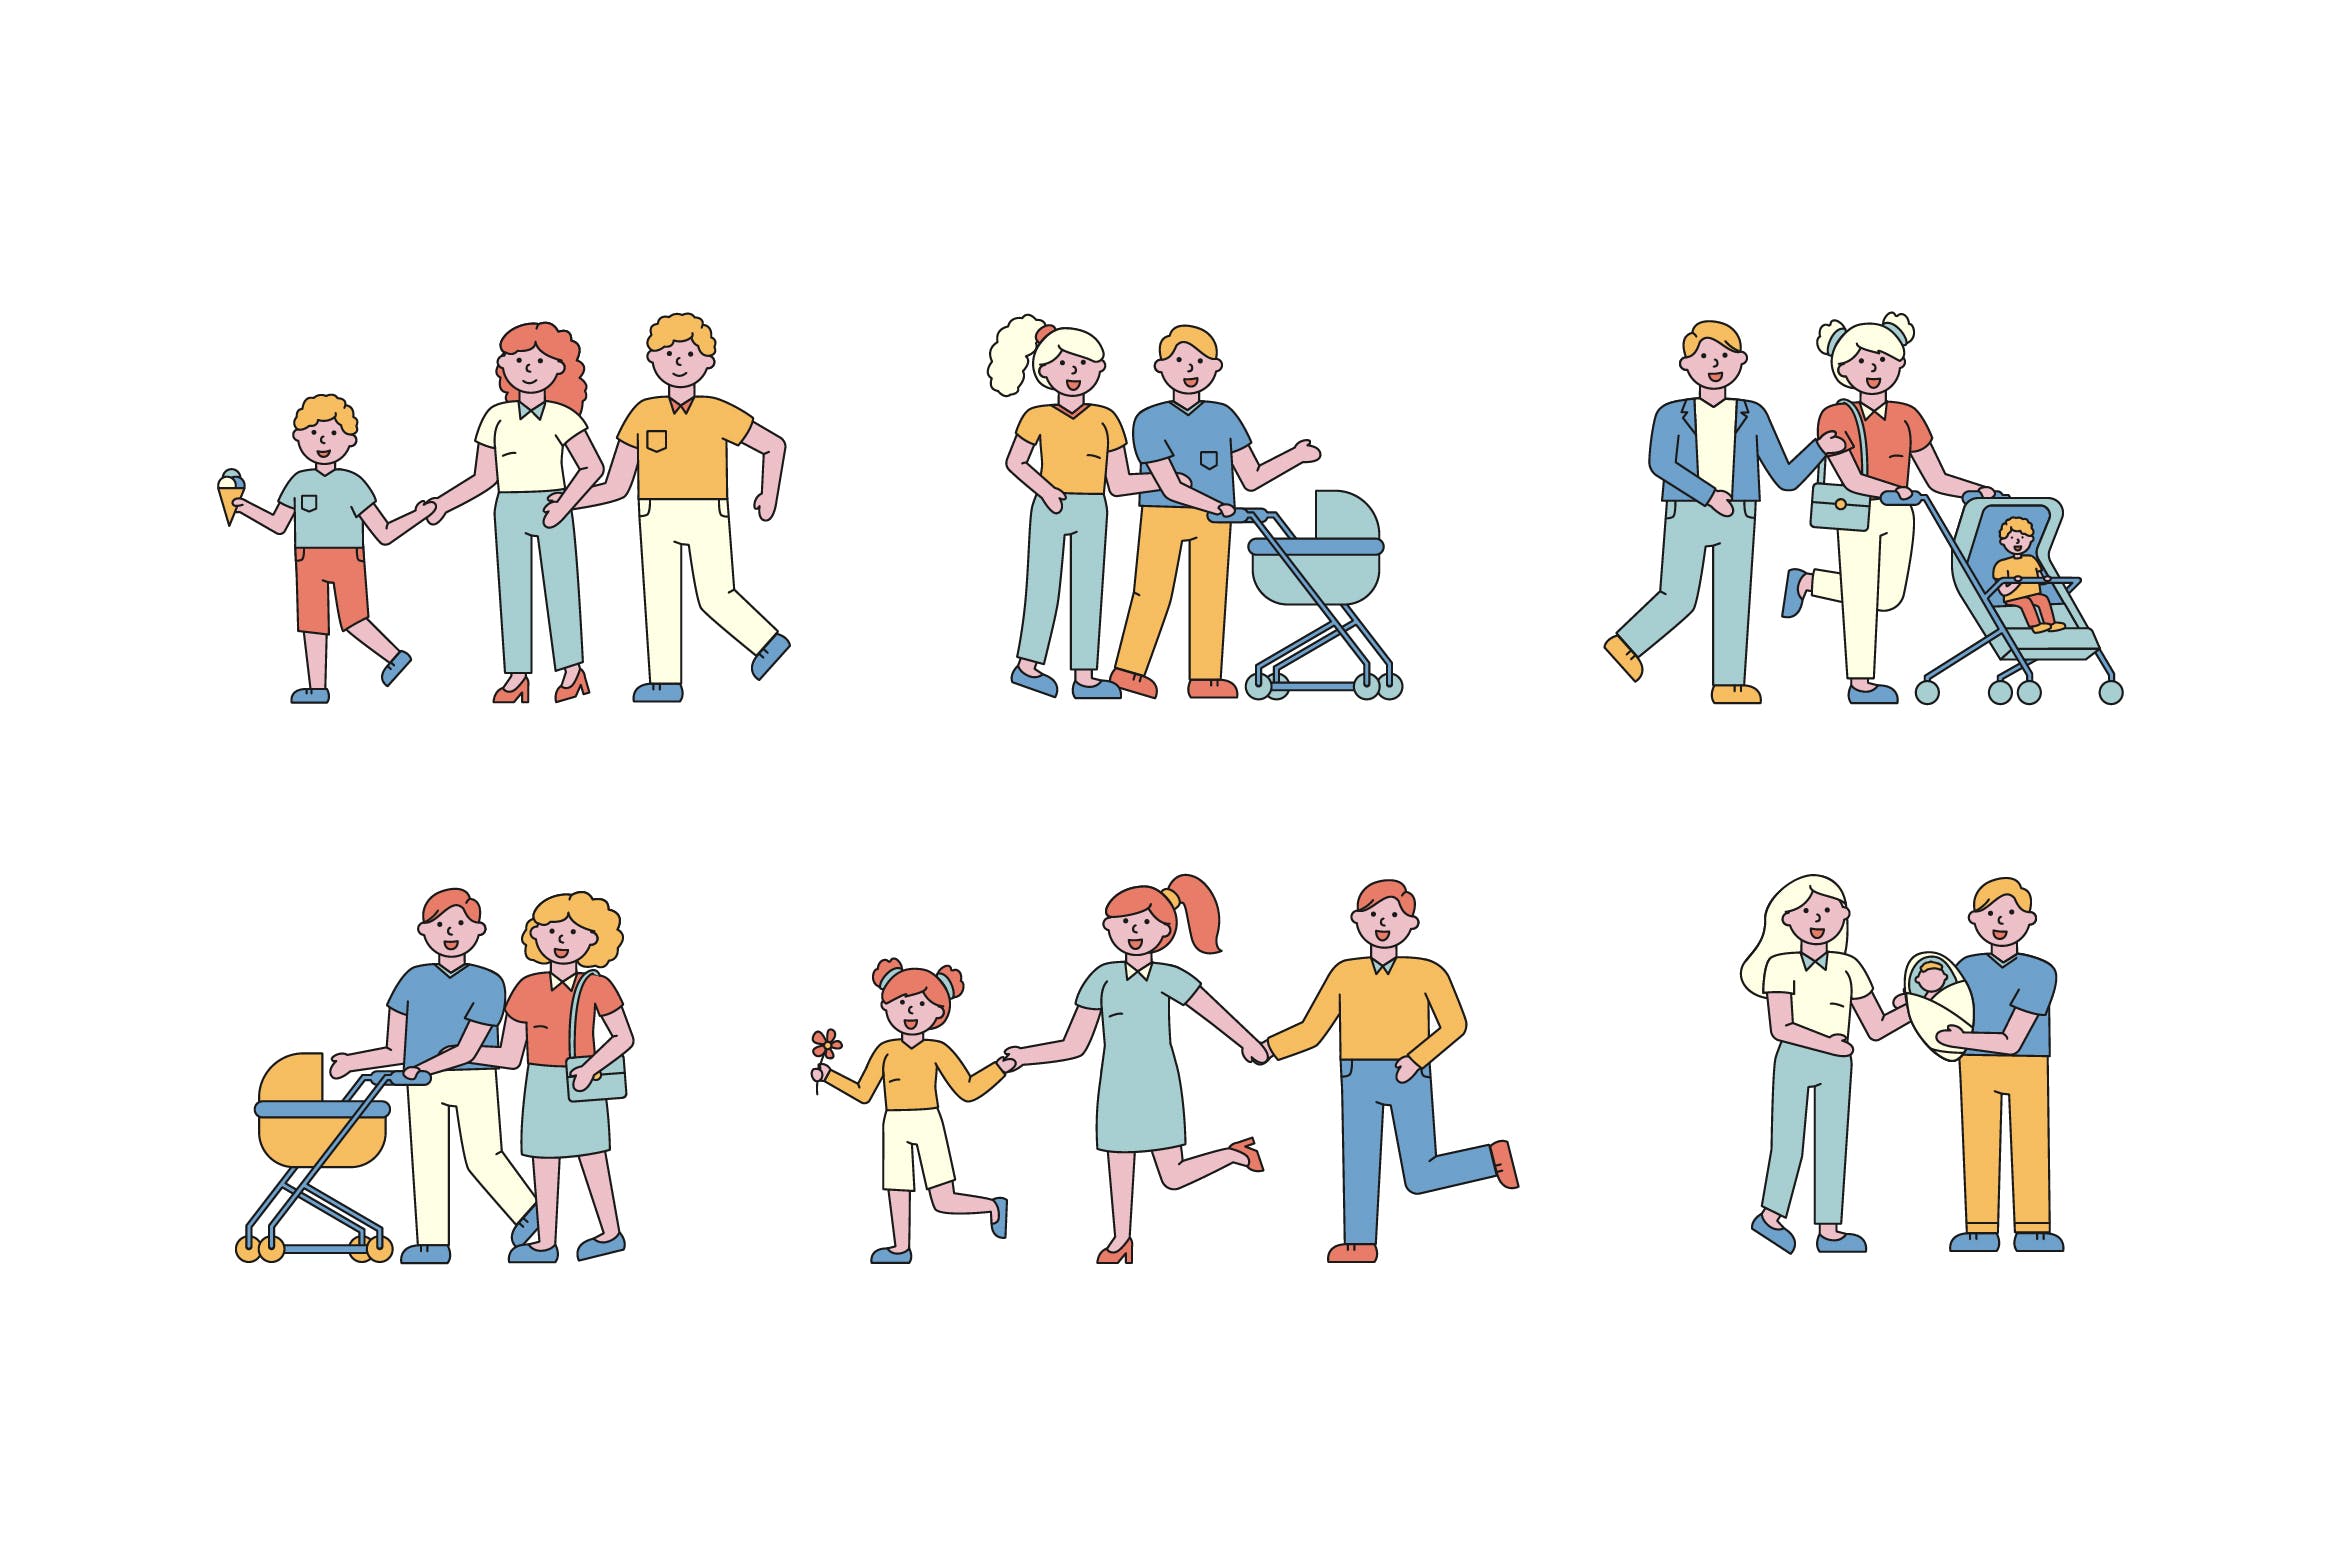 亲子活动主题人物形象线条艺术矢量插画16图库精选素材 Family Lineart People Character Collection插图